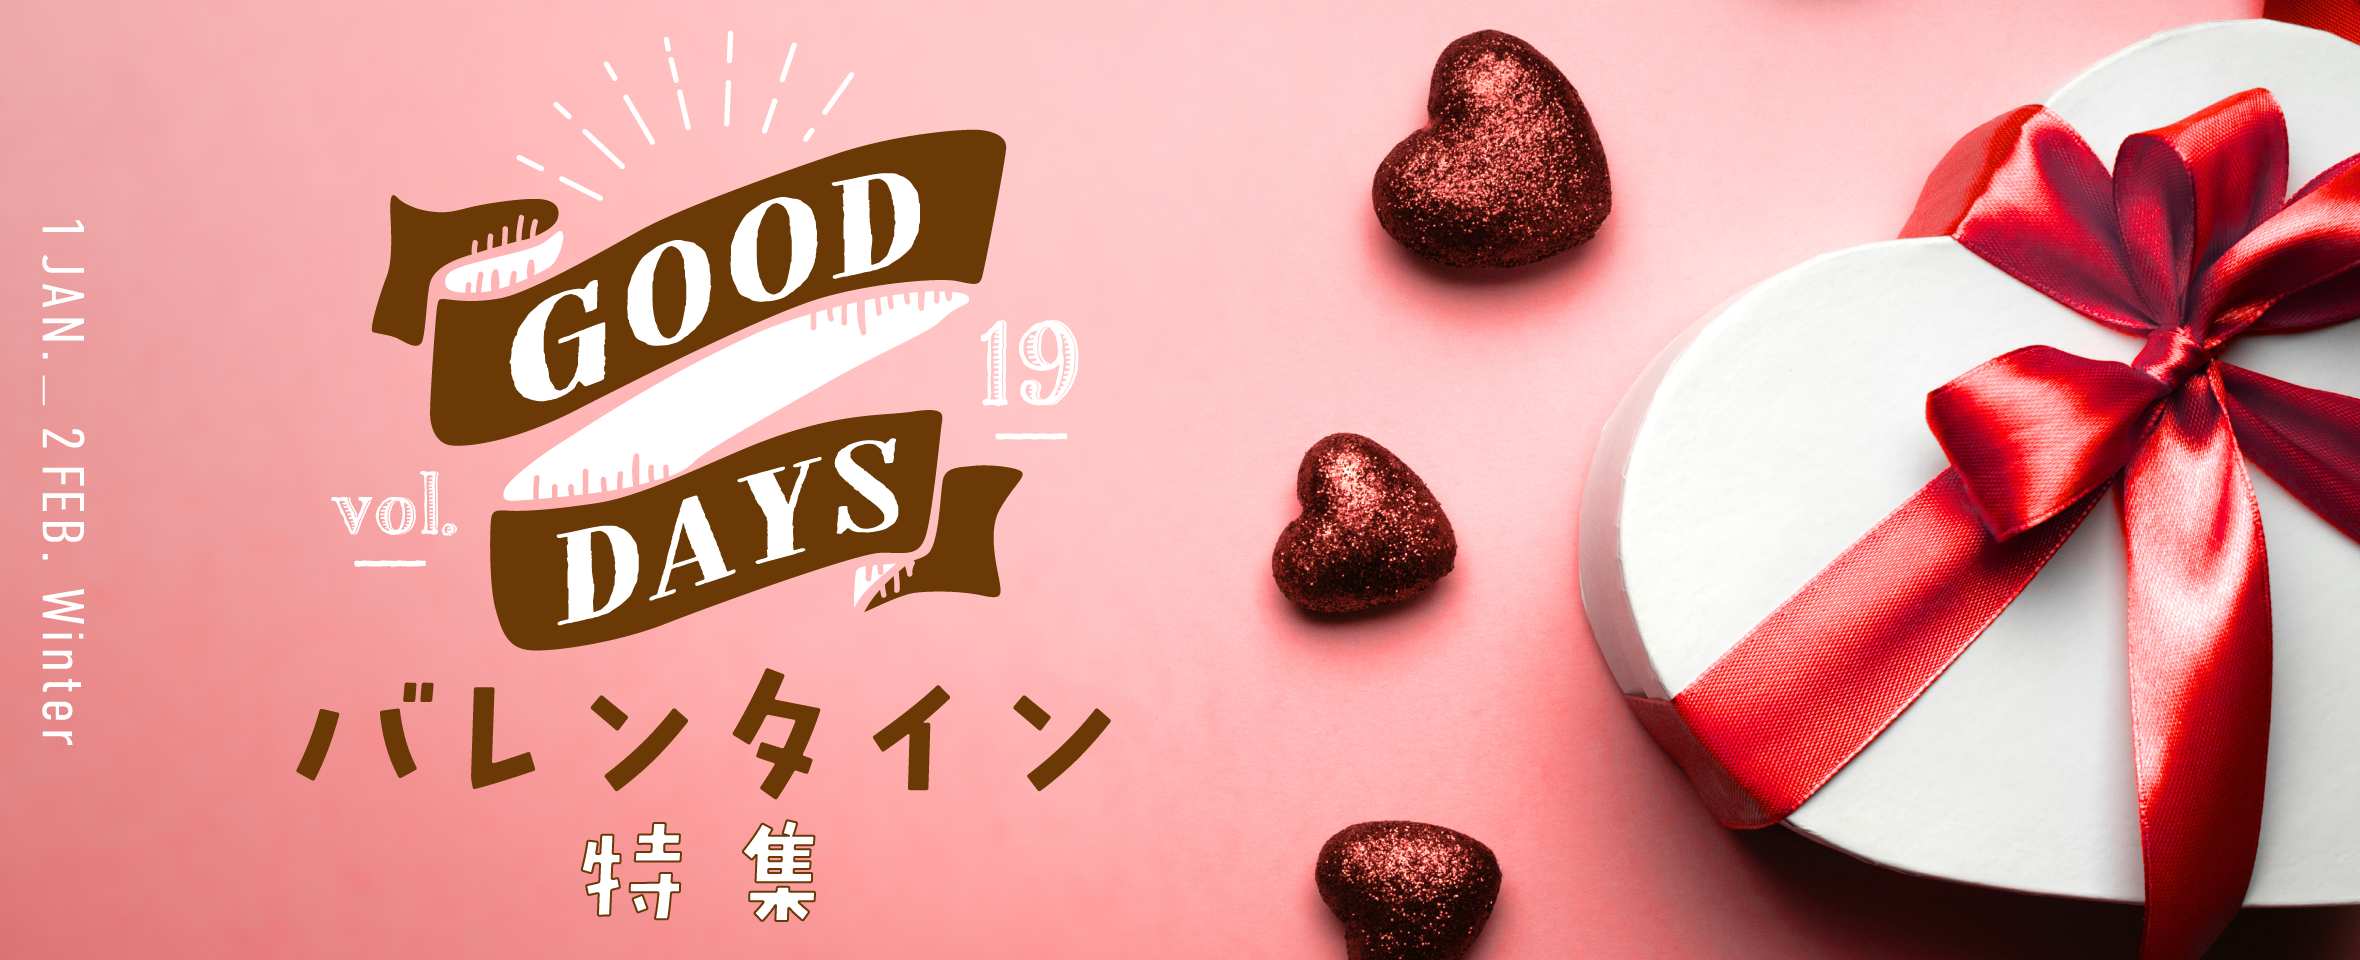 GOOD DAYS Vol.19 バレンタイン 特集